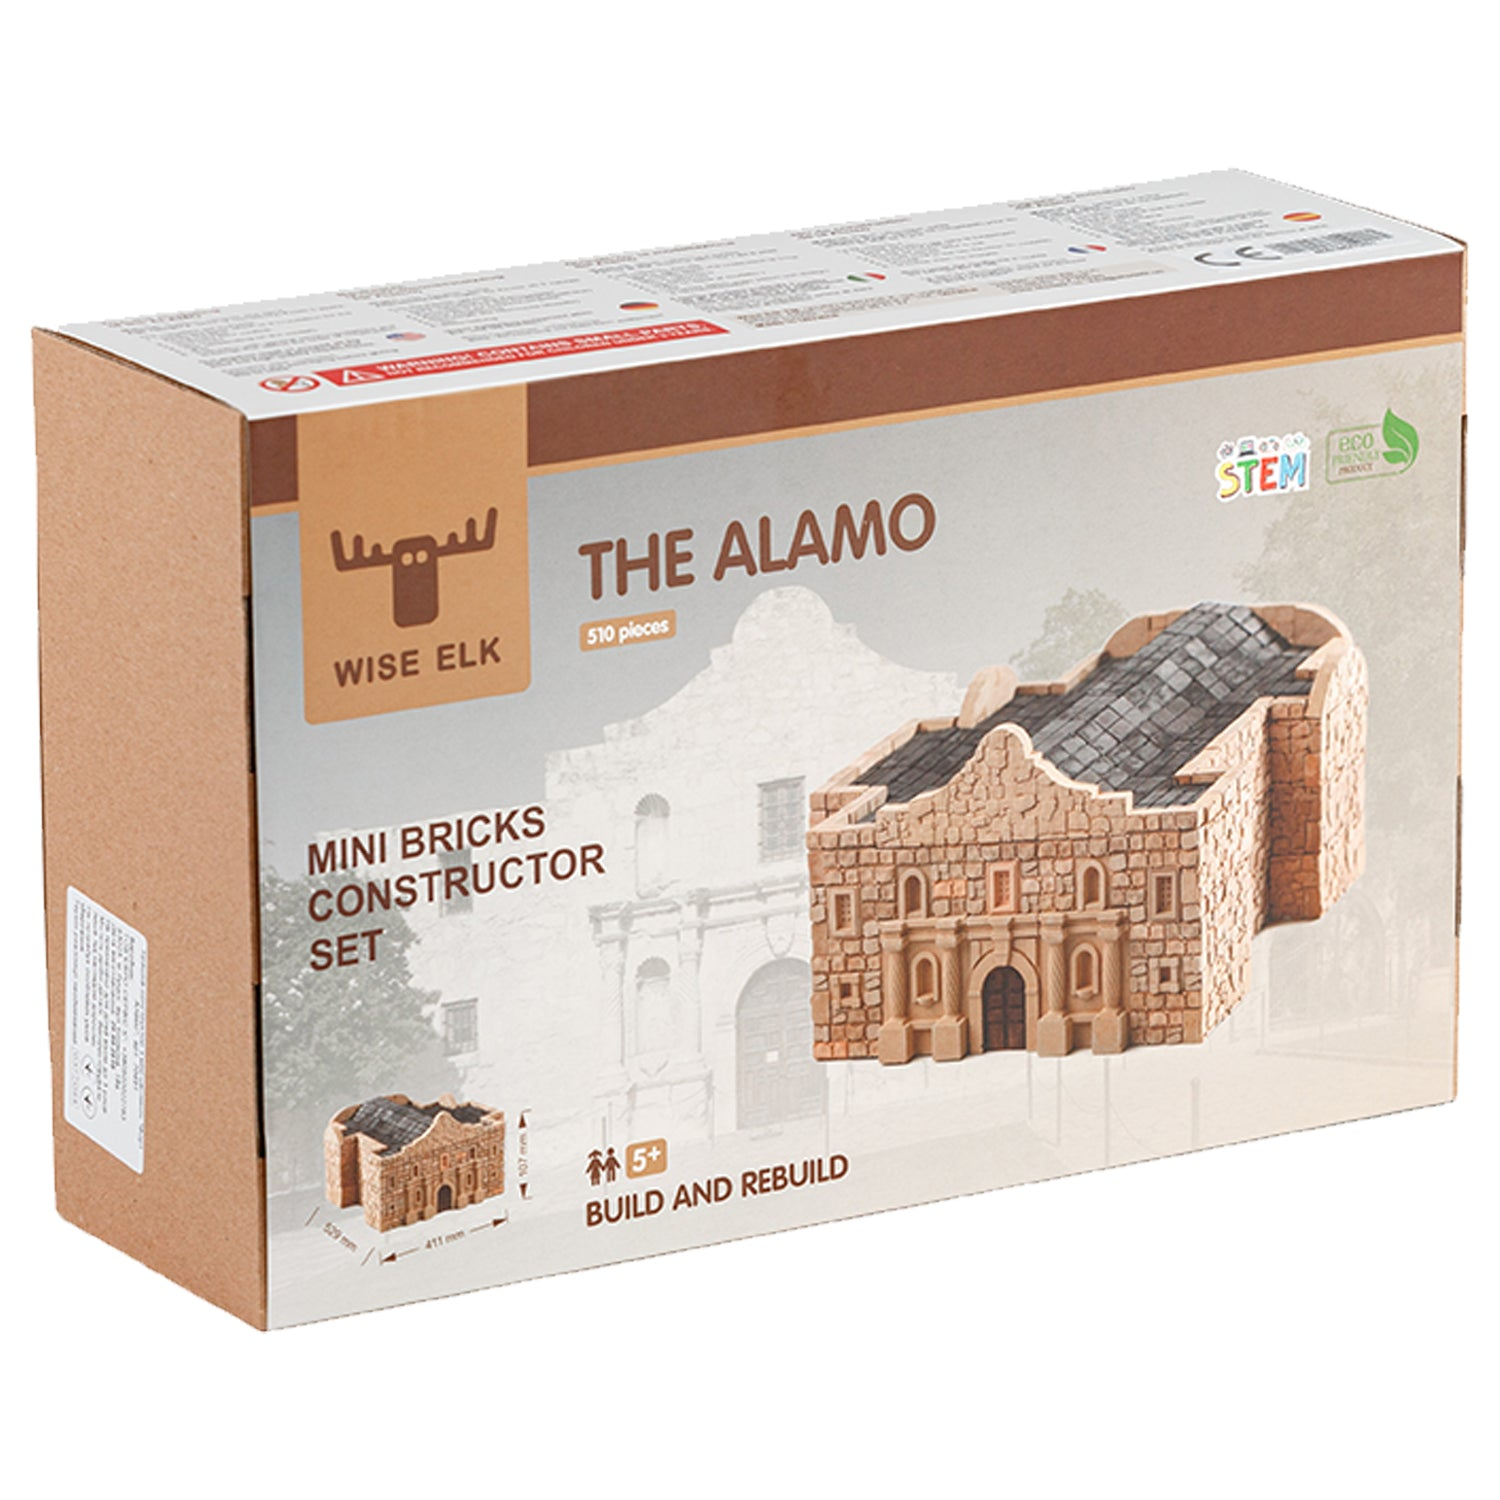 Mini Bricks Construction Set - Alamo, Goodies N Stuff